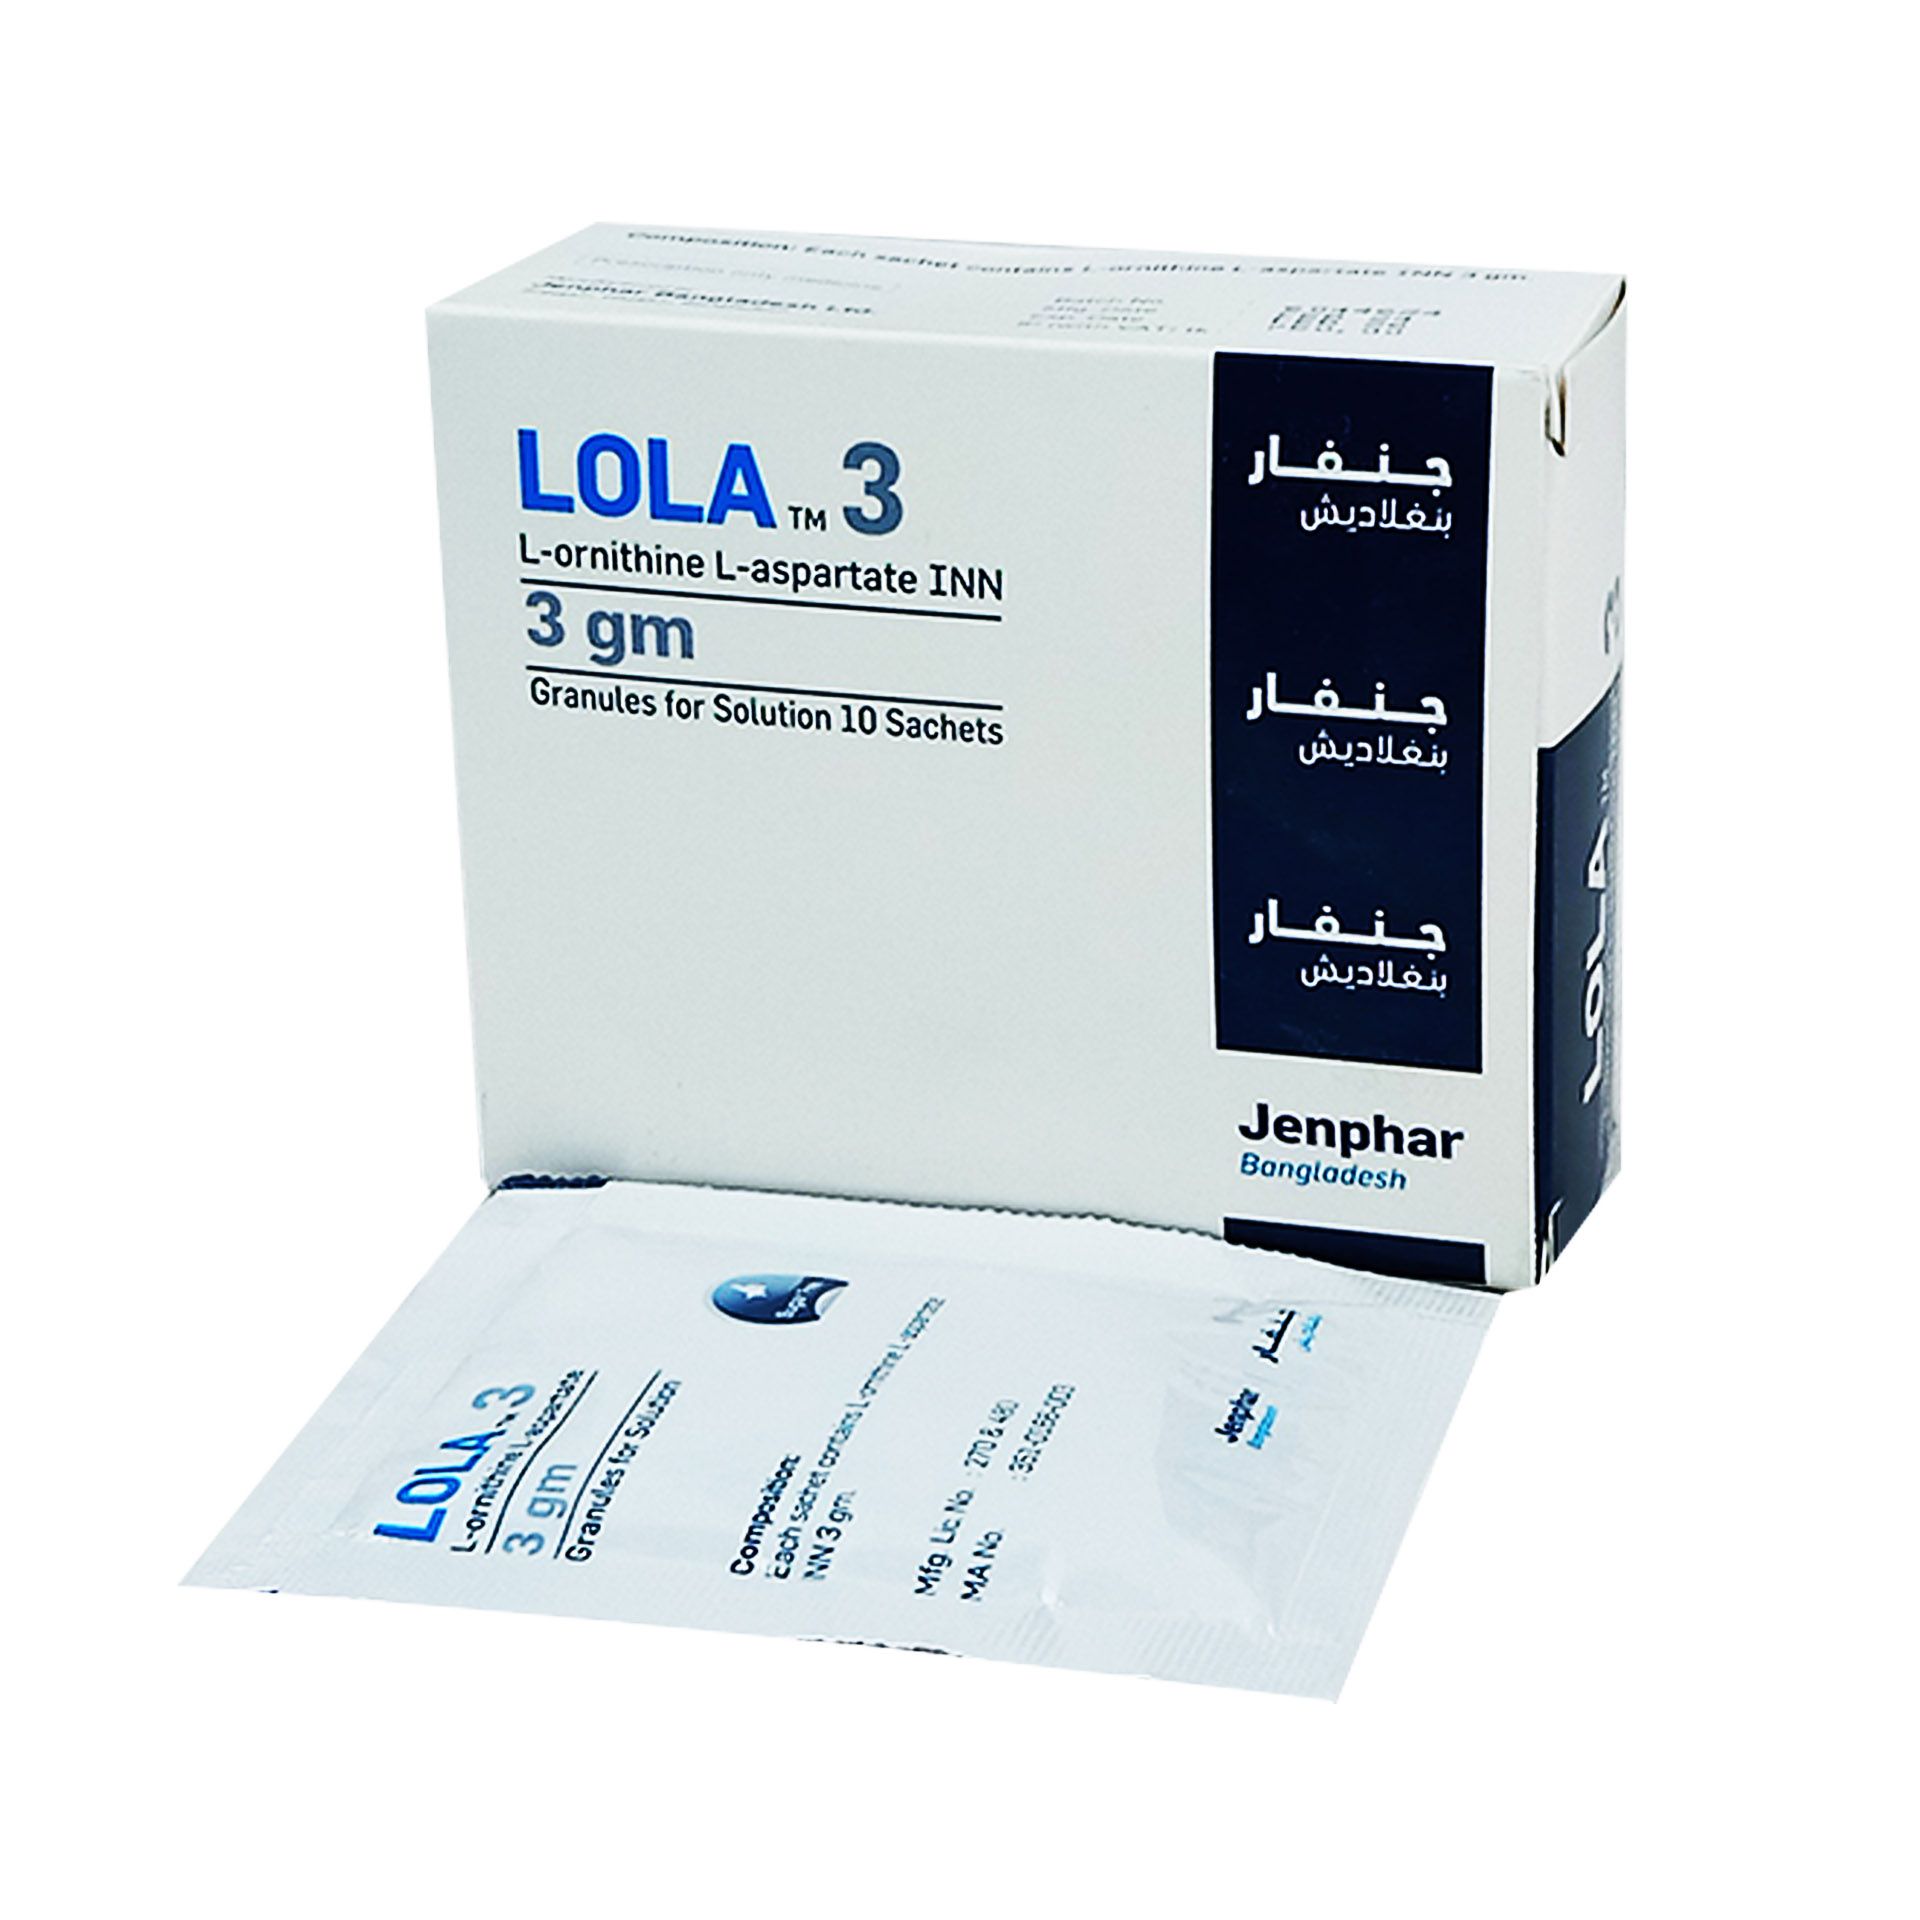 Lola 3gm/sachet powder